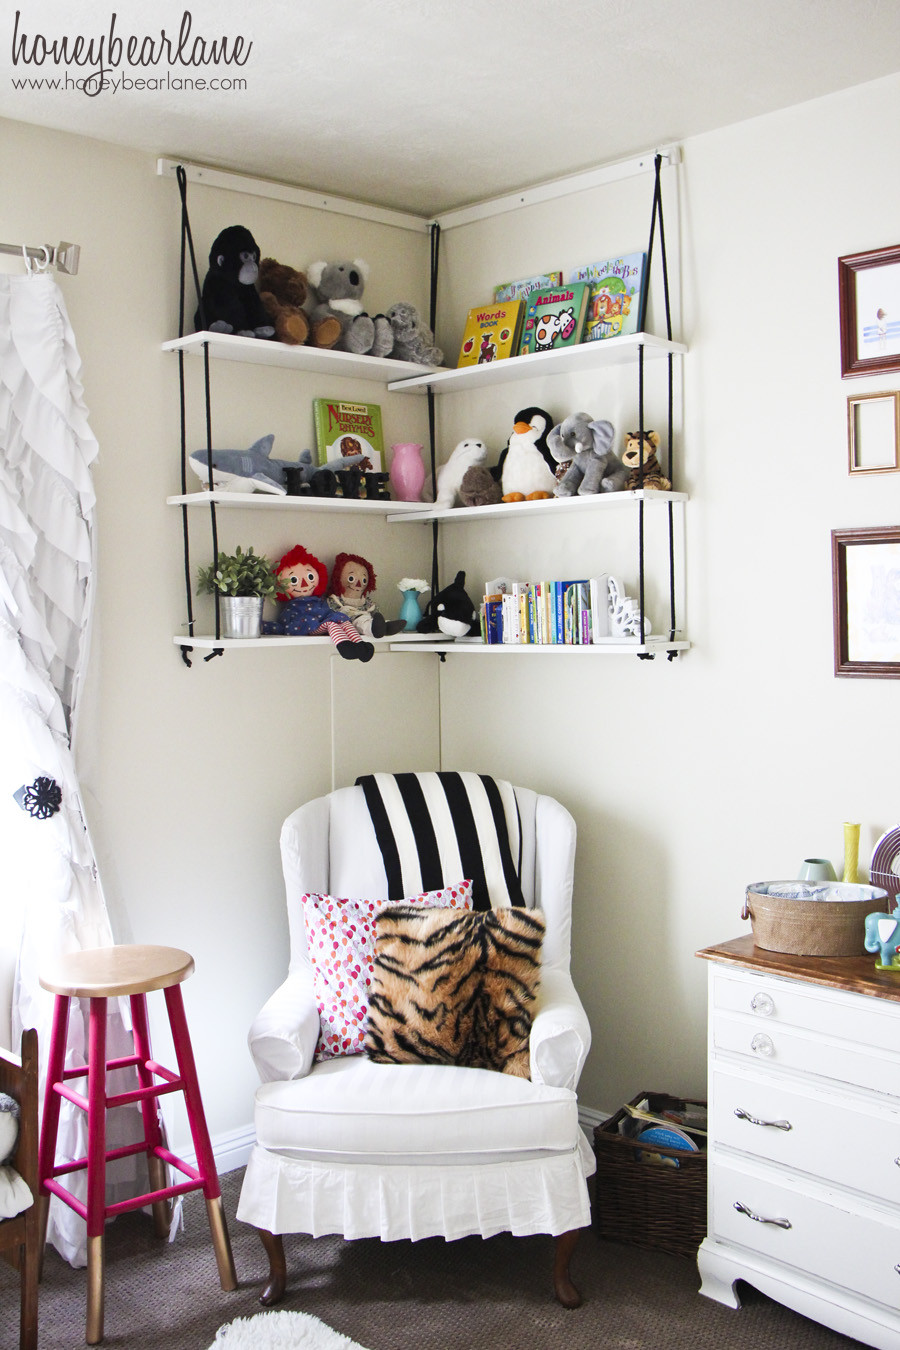 Best ideas about DIY Corner Shelves
. Save or Pin Corner Rope Shelves DIY HoneyBear Lane Now.